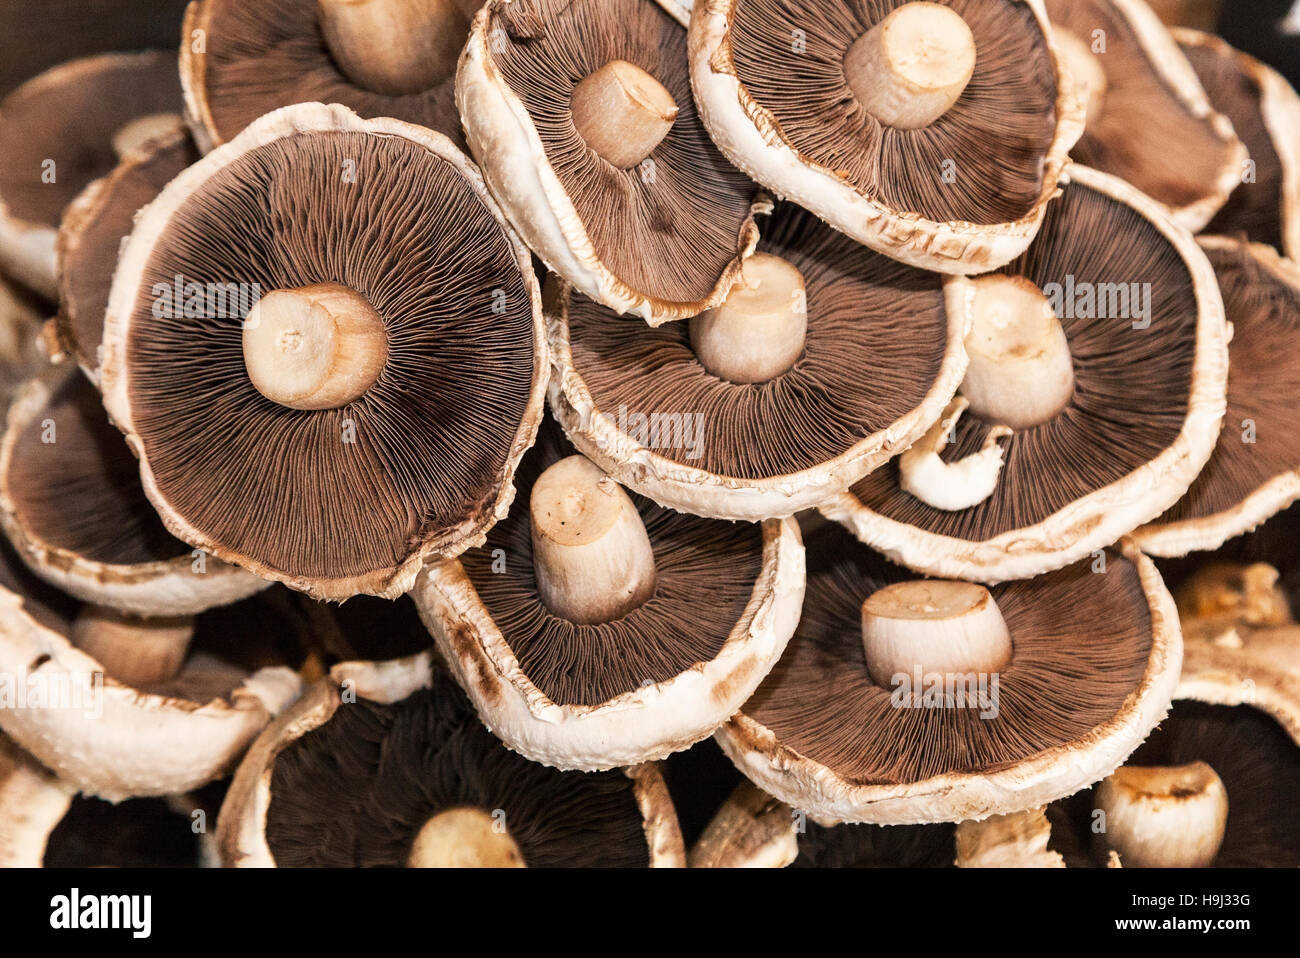 The underside of fresh mushrooms Stock Photo